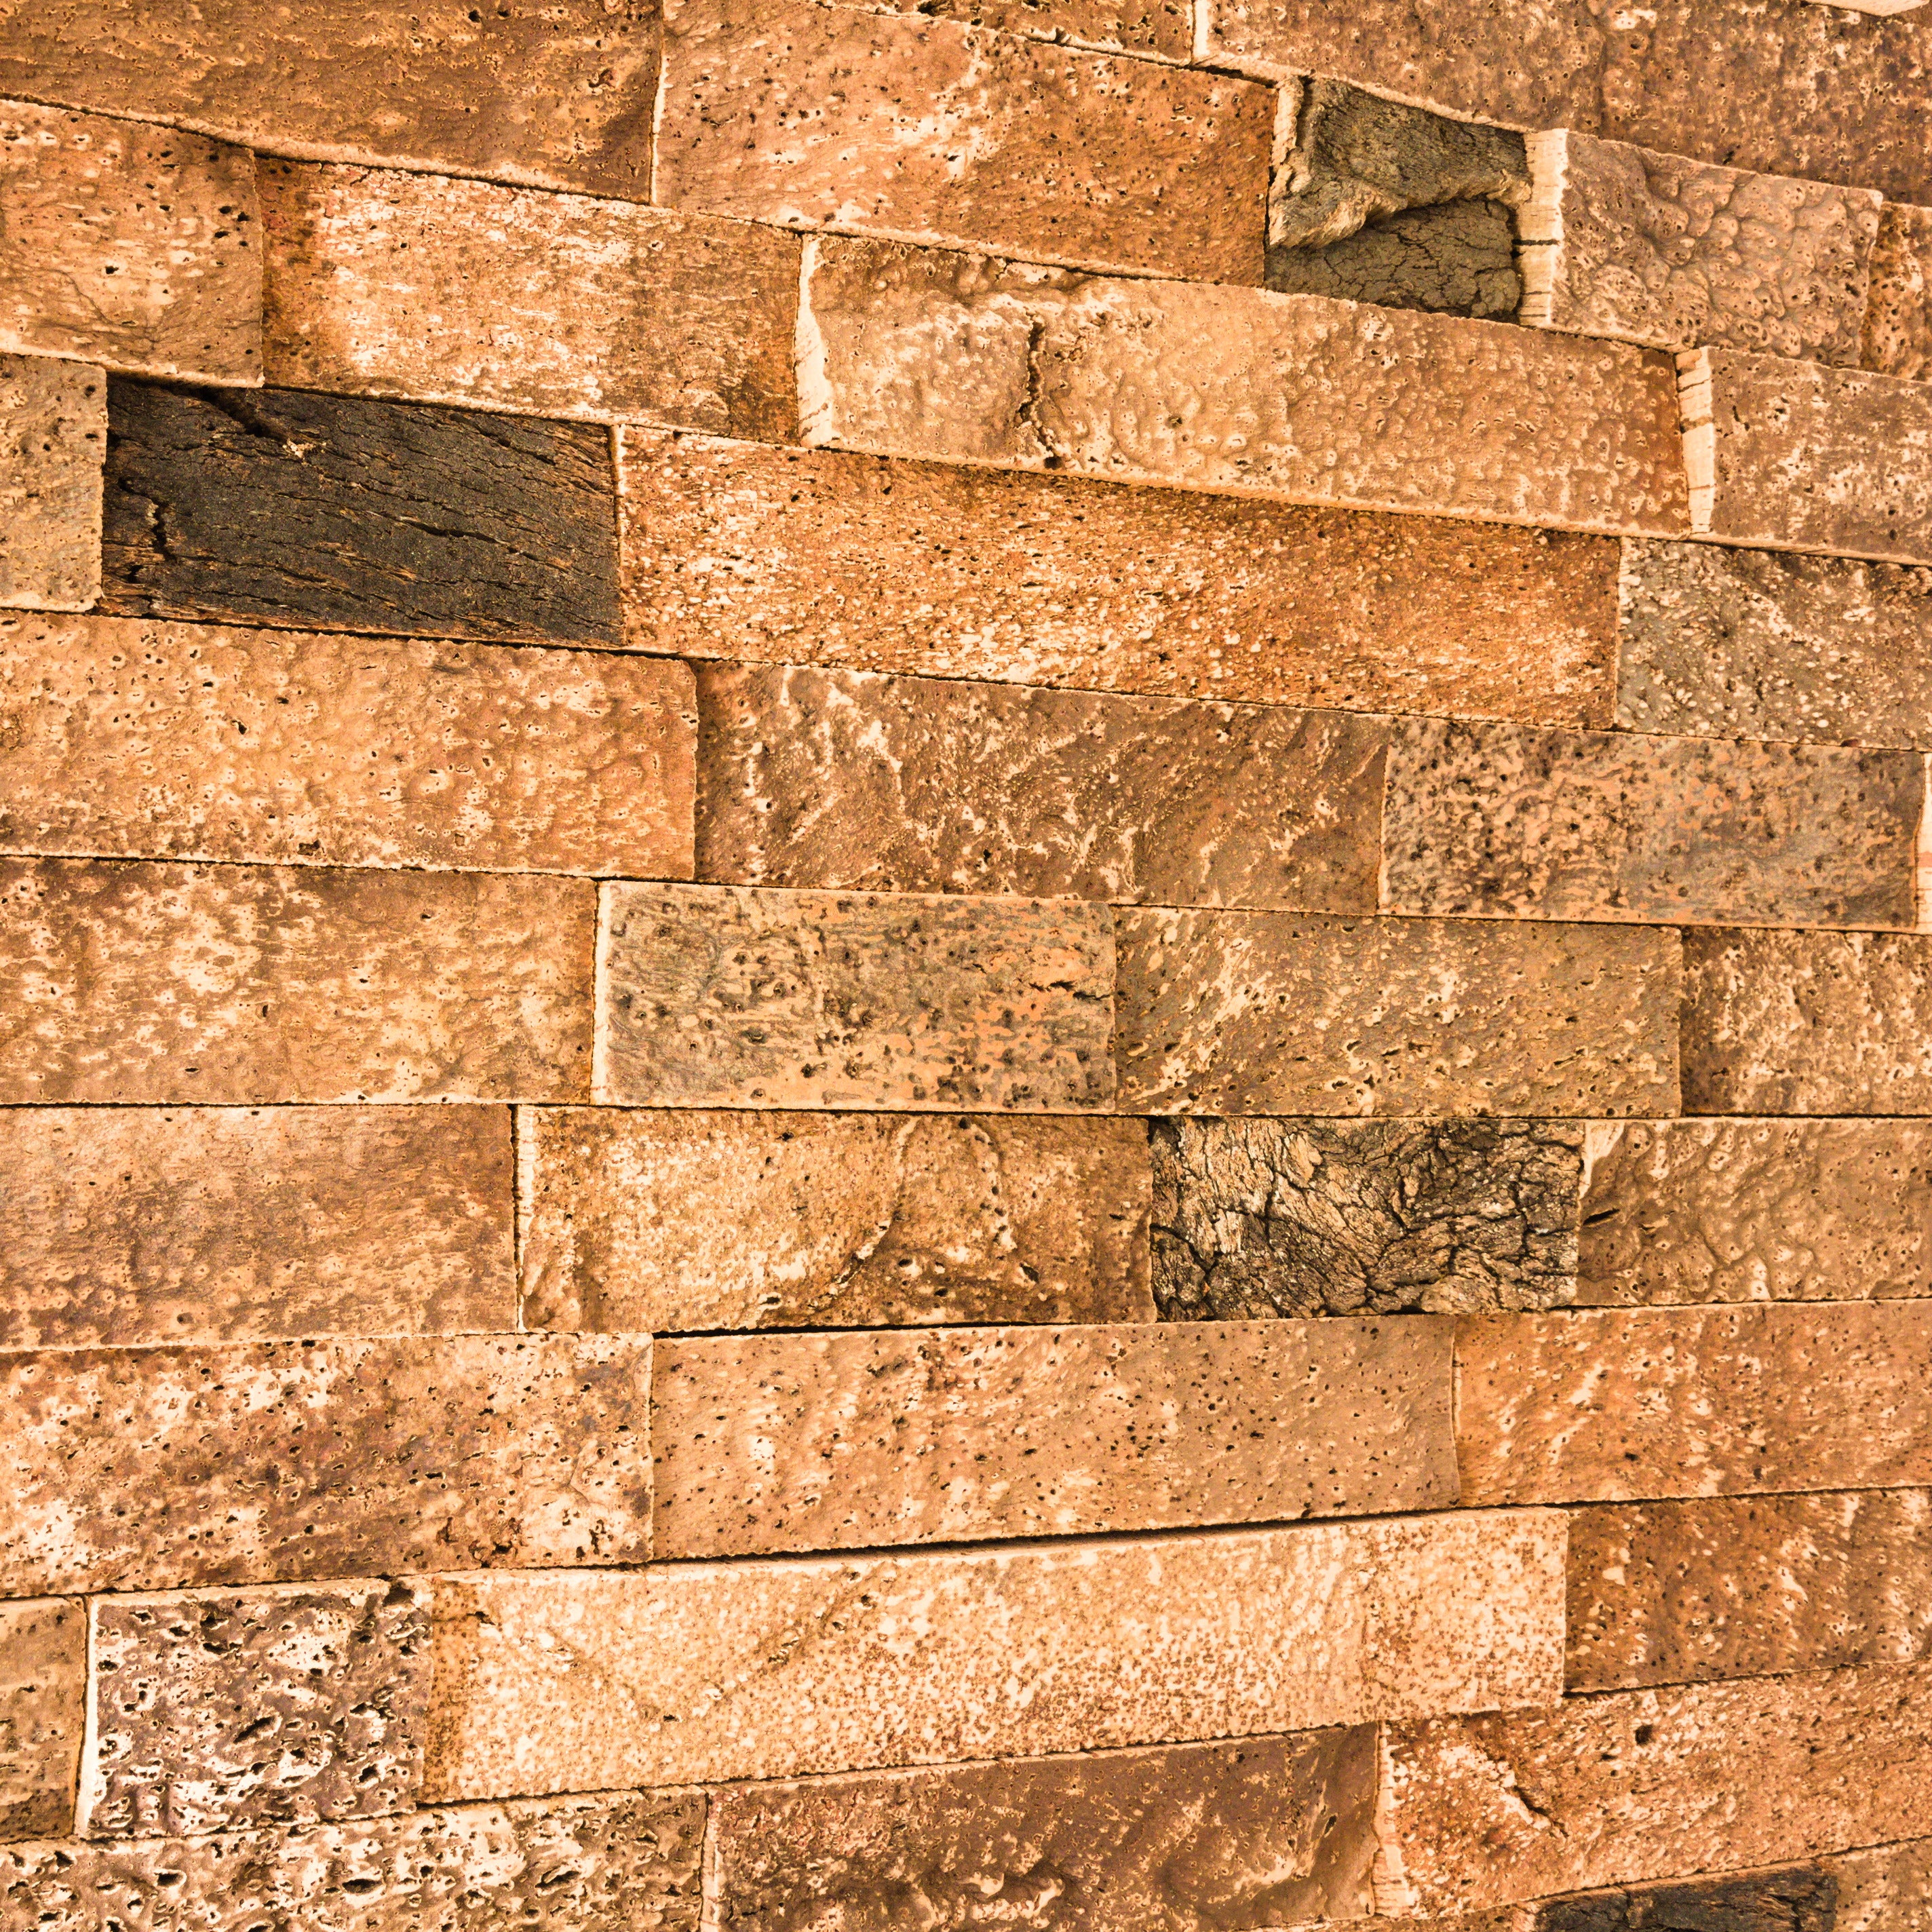 Cork Wall Tiles